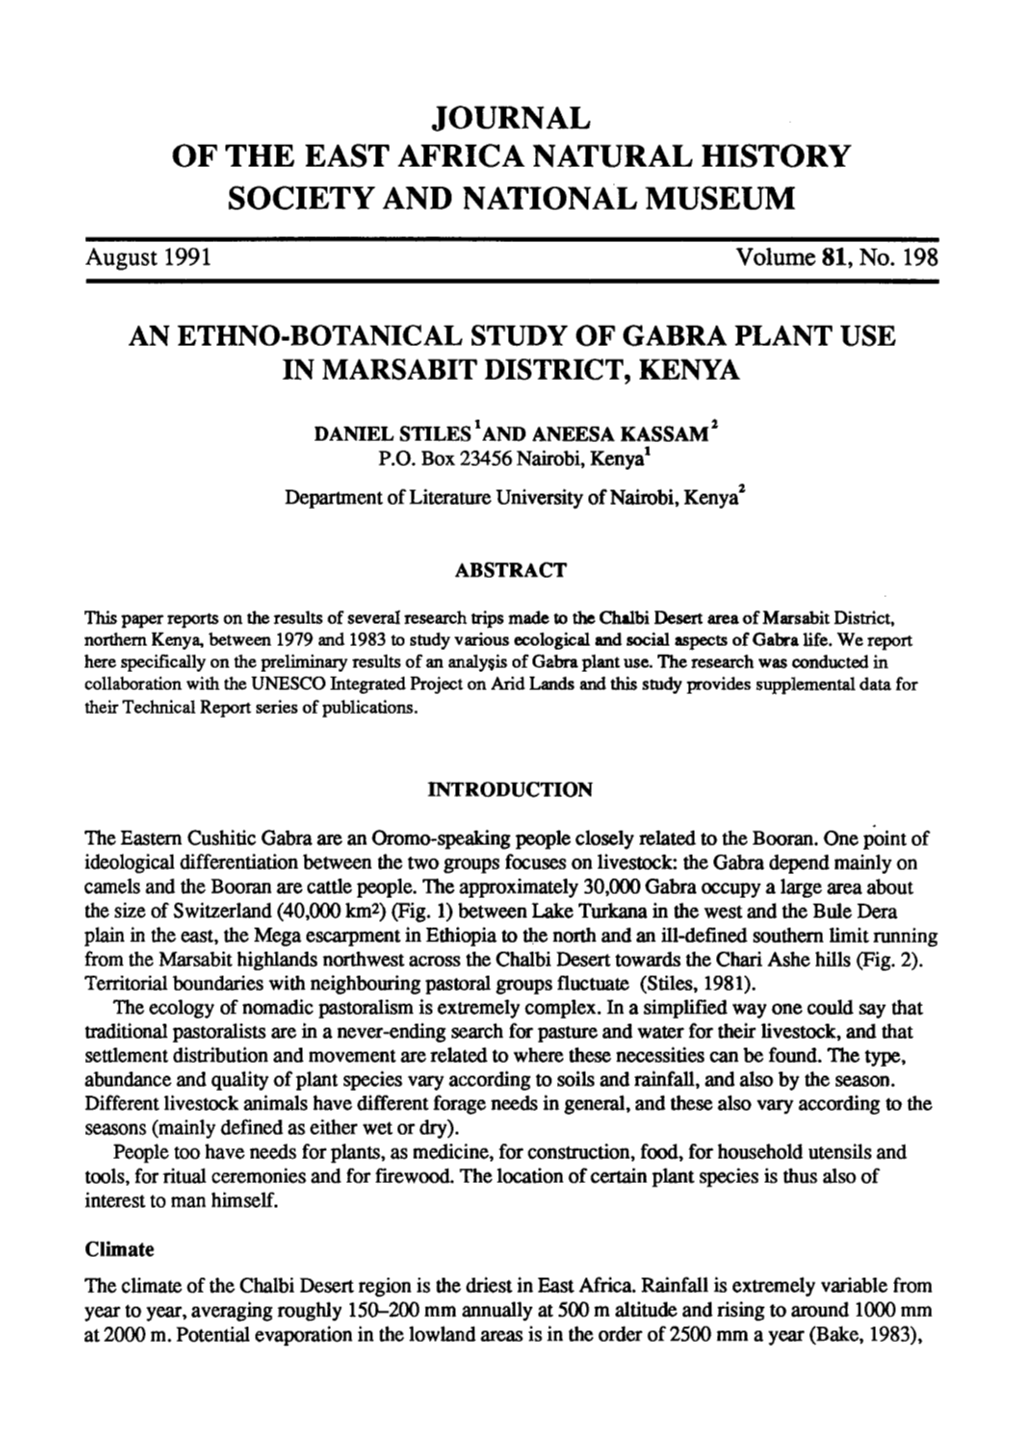 An Ethno-Botanical Study of Gabra Plant Use in Marsabit District, Kenya